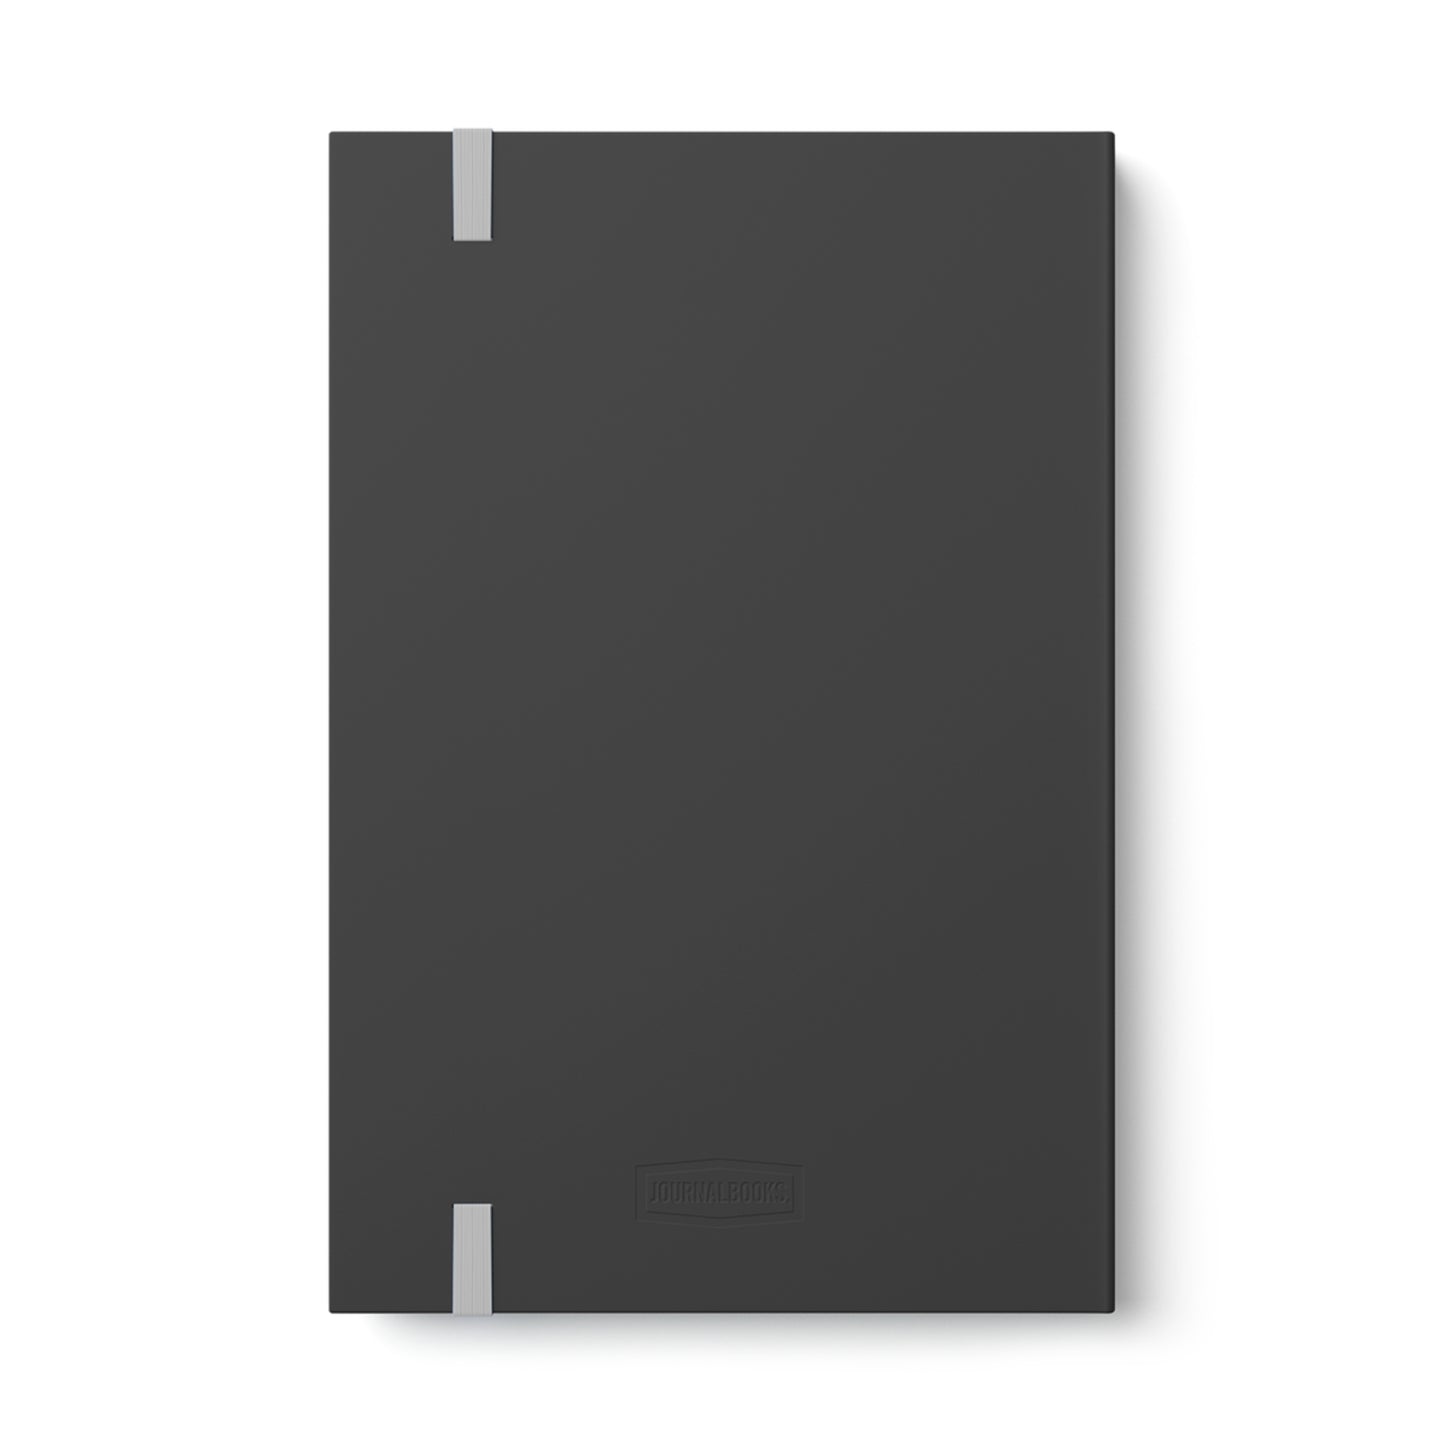 we still need title ix notebook - ruled